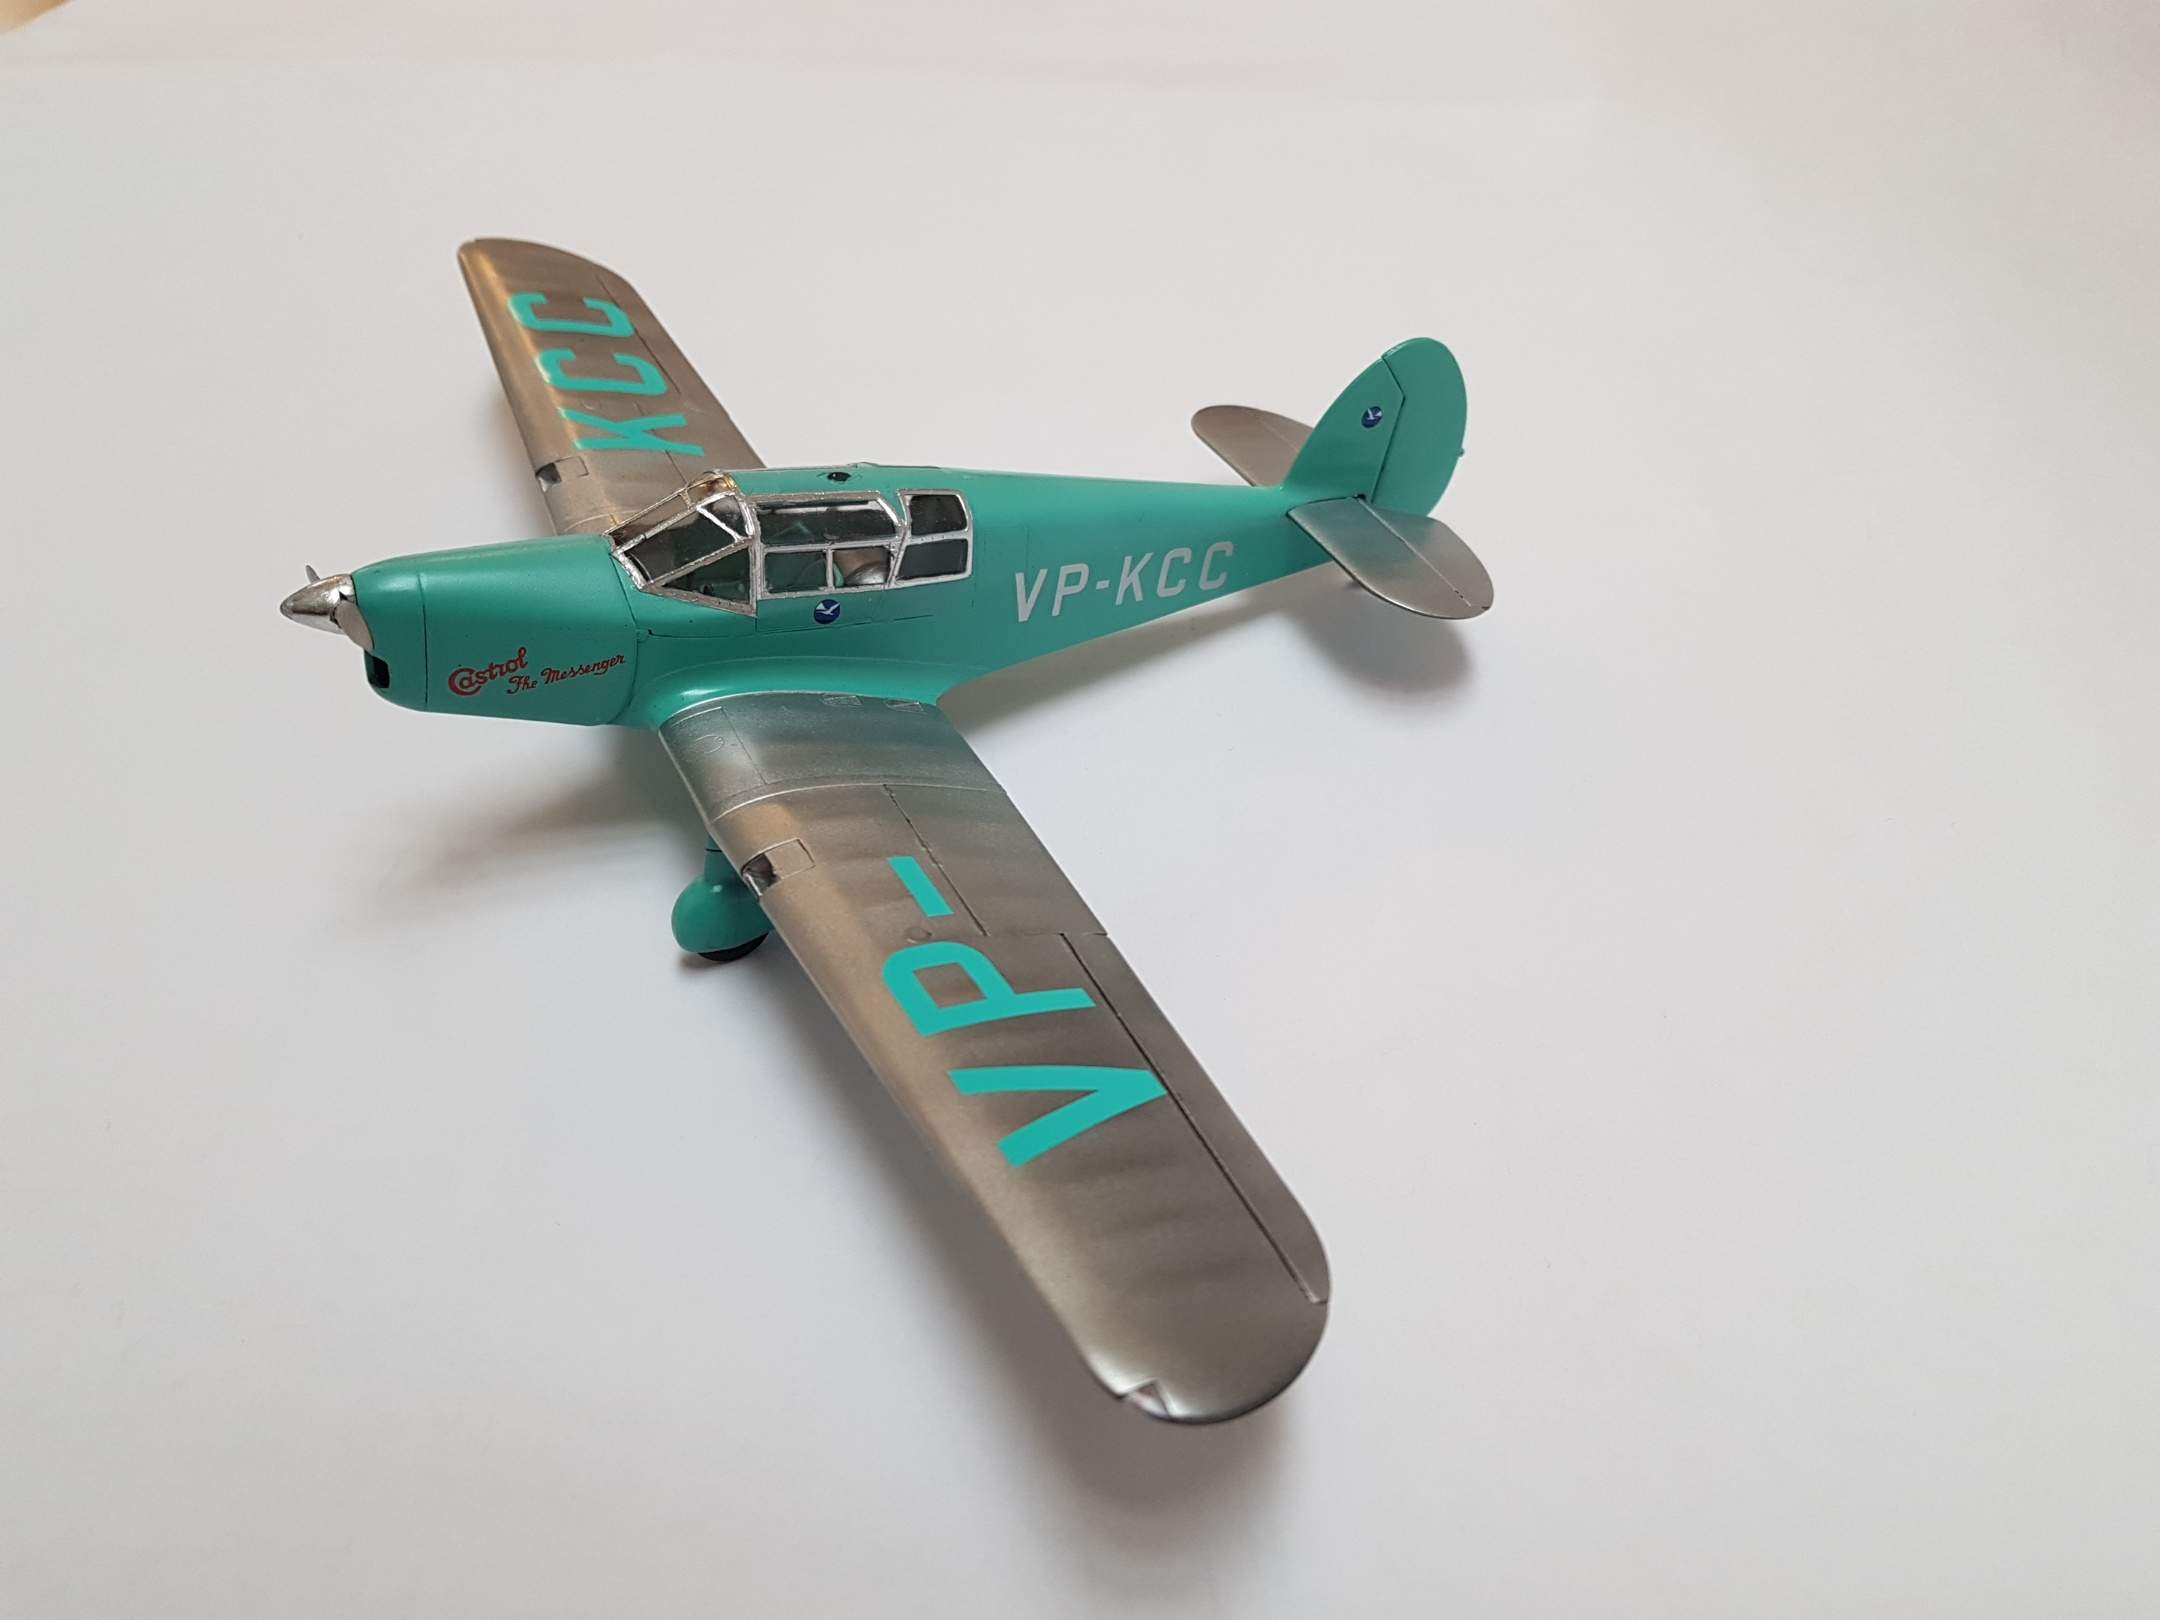 VP-KCC as flown by aviator Beryl Markham. Dora Wings, 1:48.